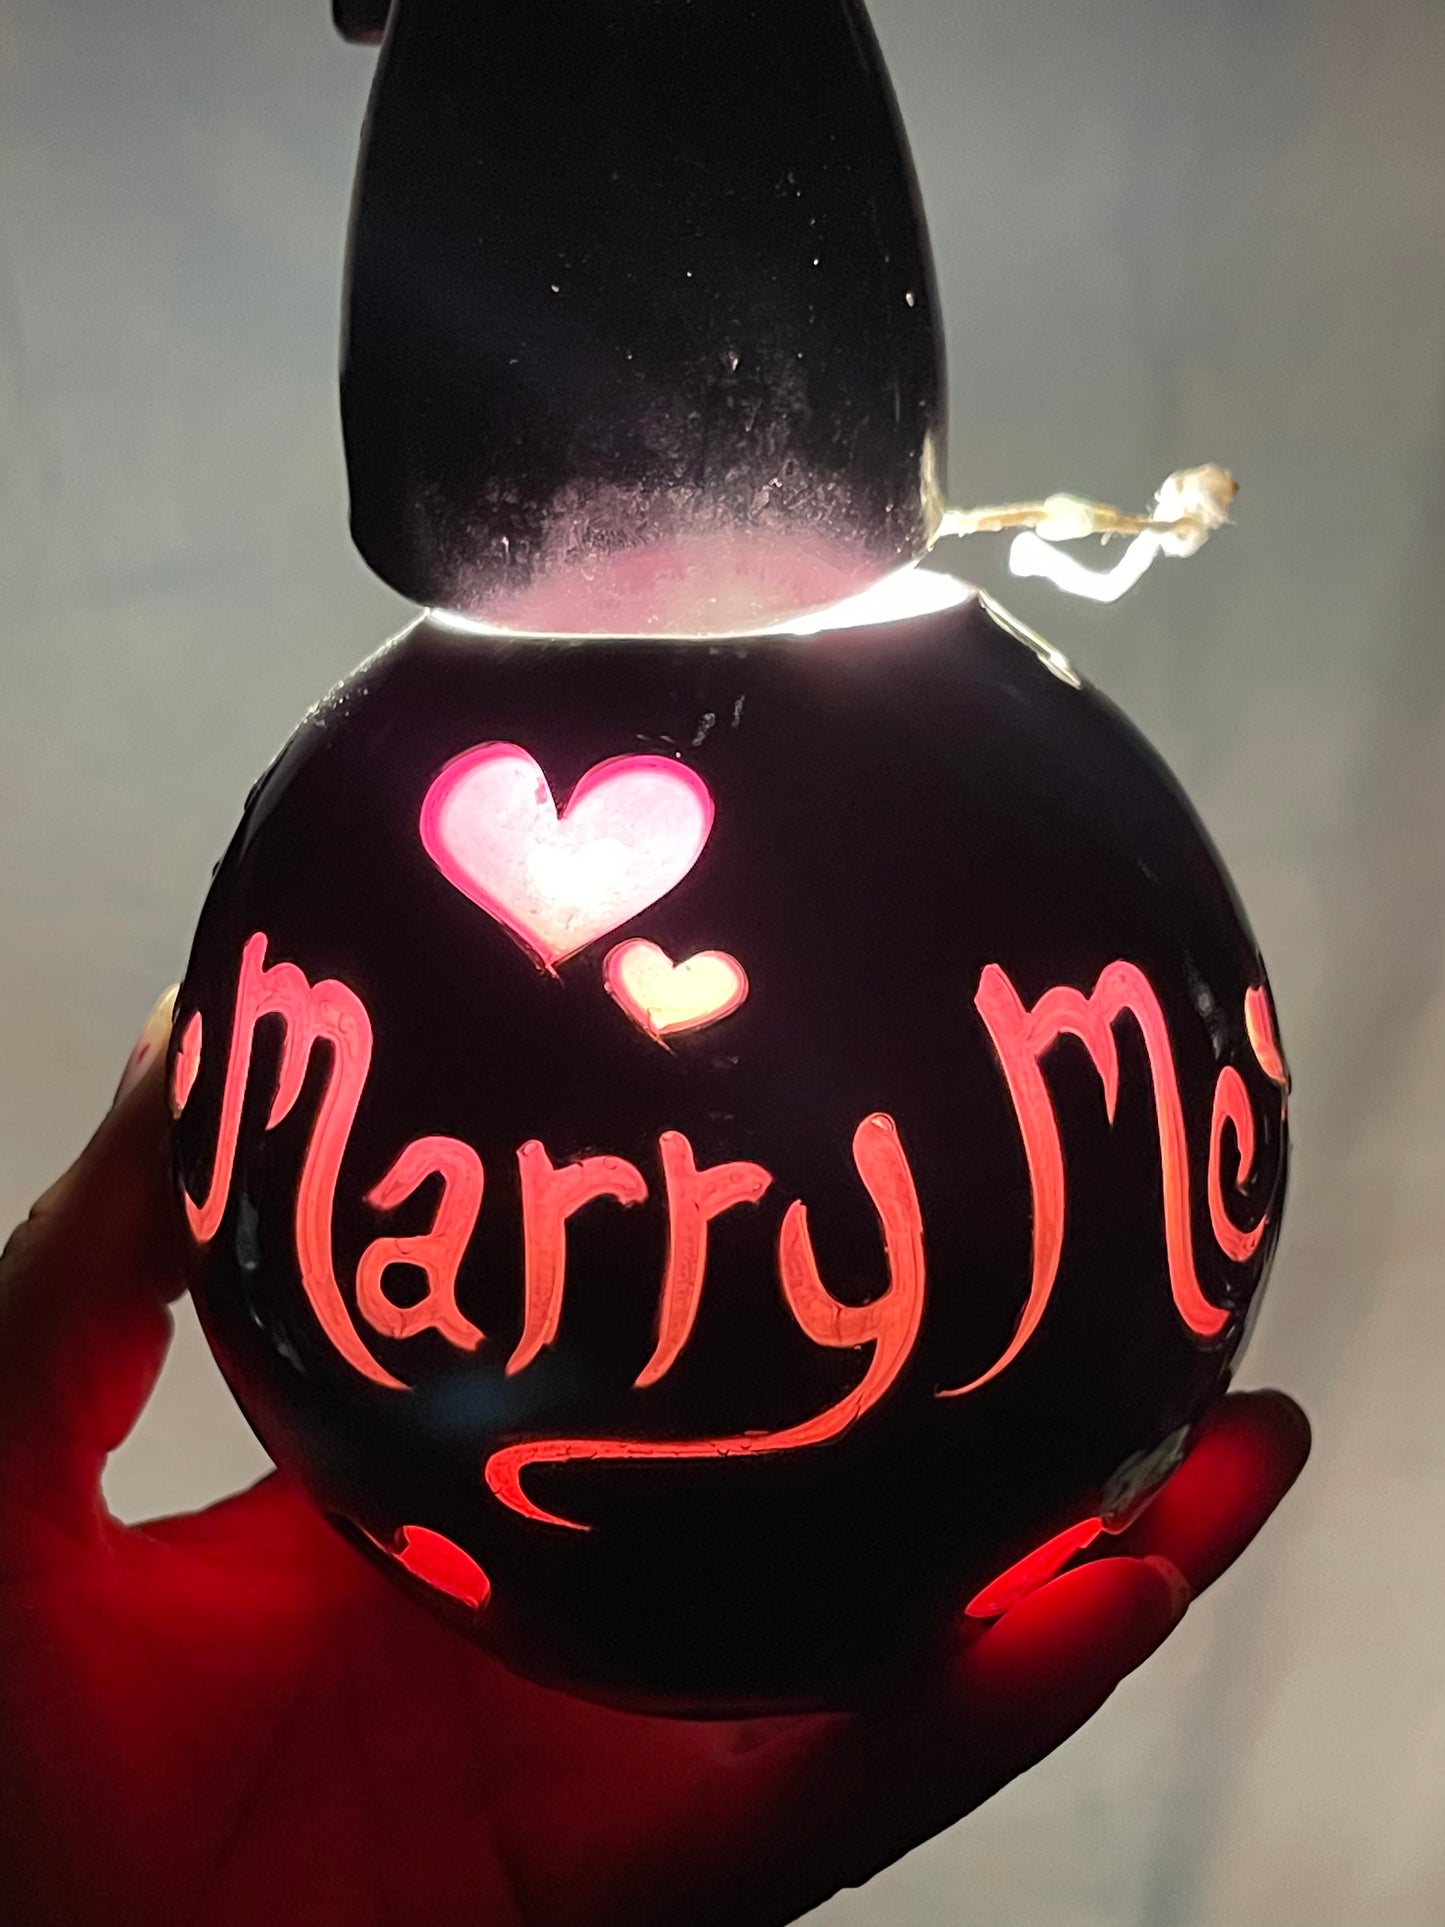 “Marry me?”